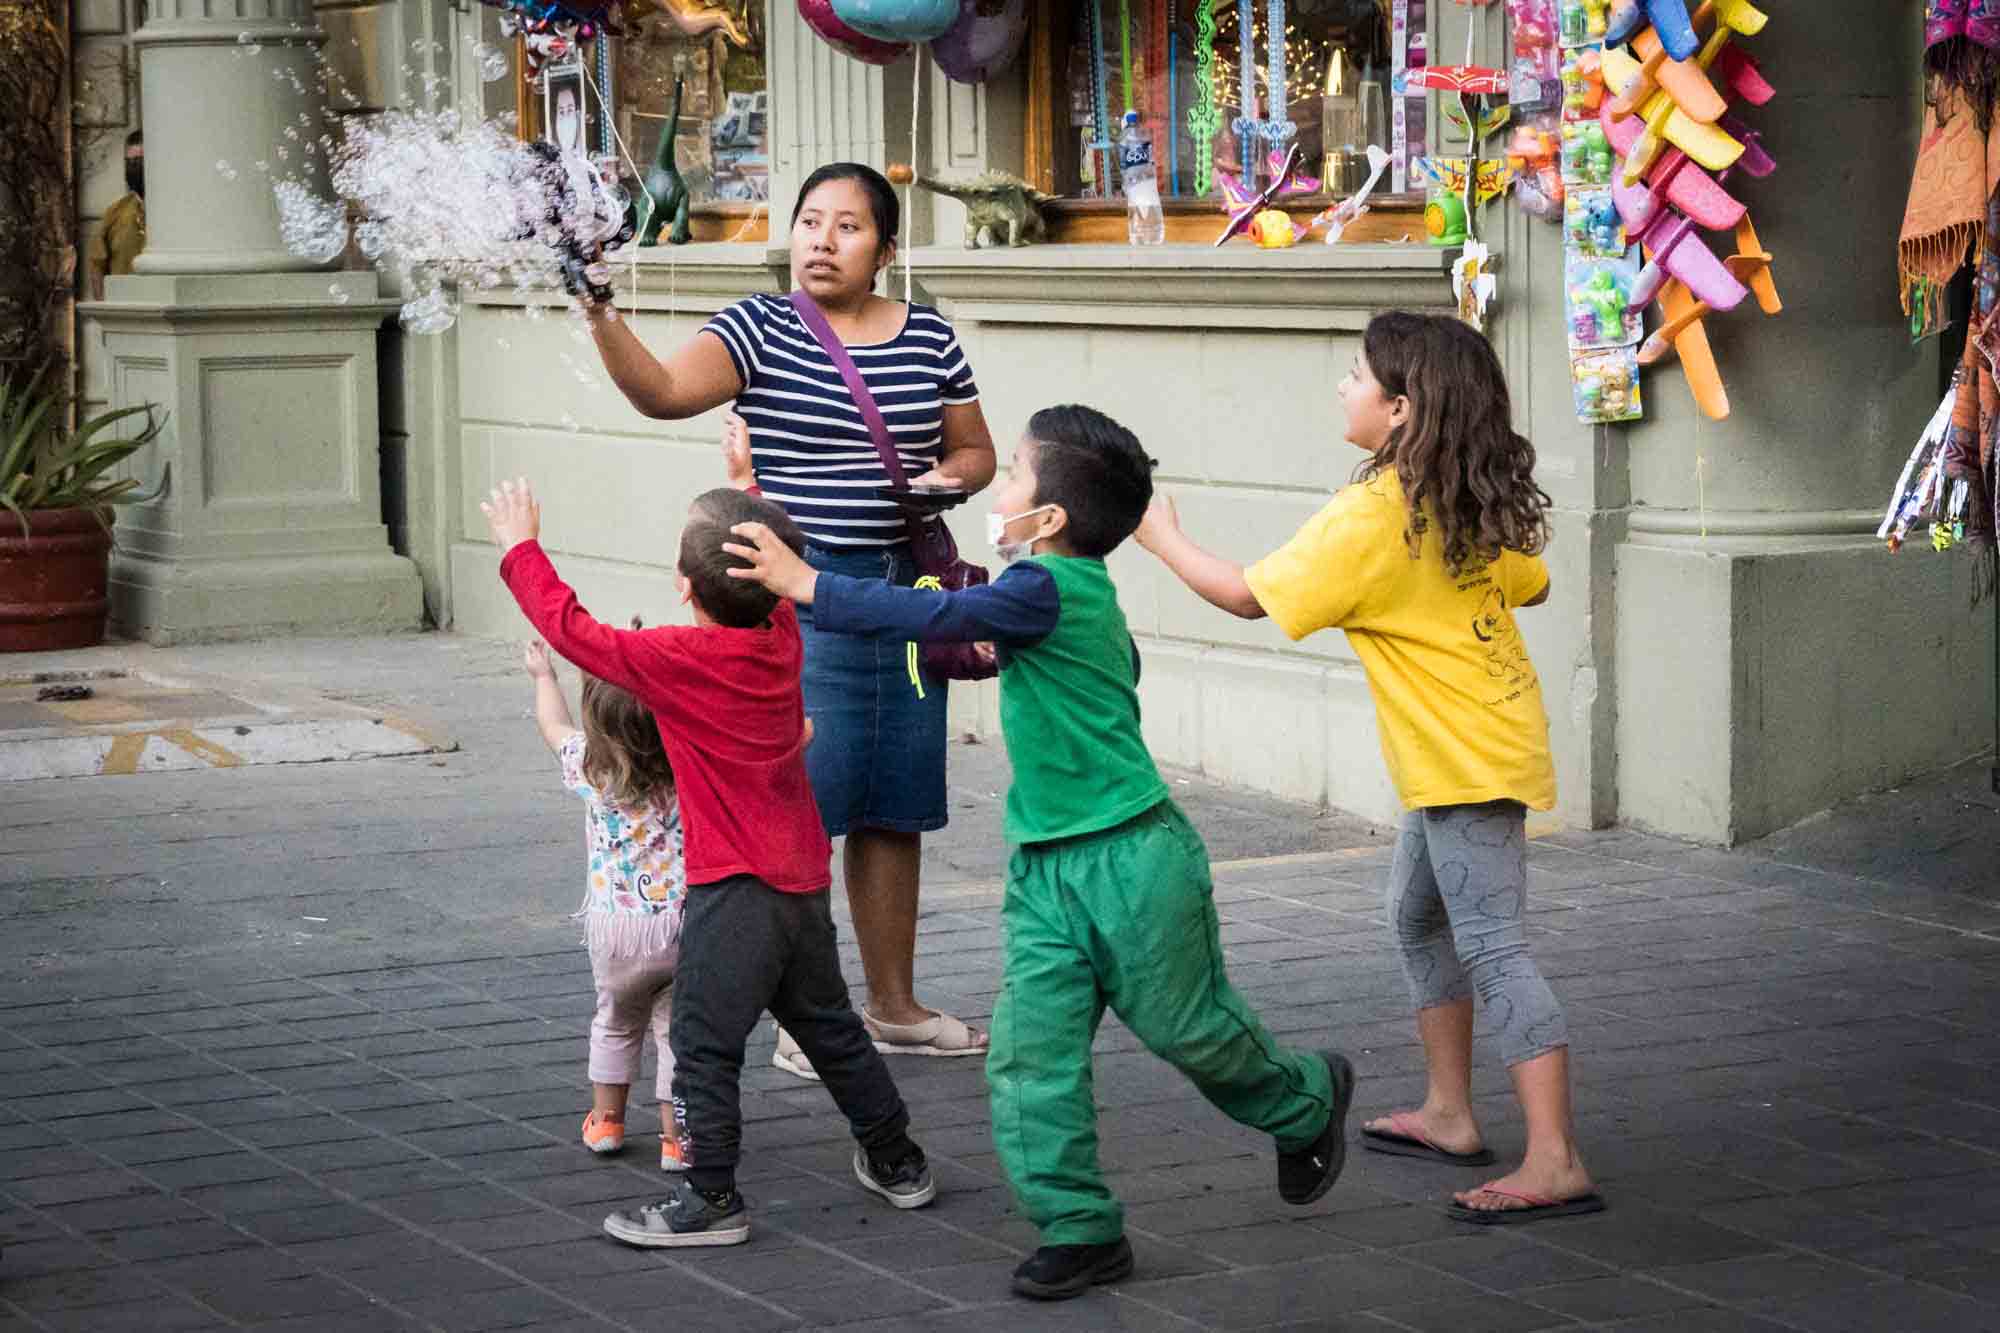 Little kids chasing after a woman blowing bubbles in Oaxaca